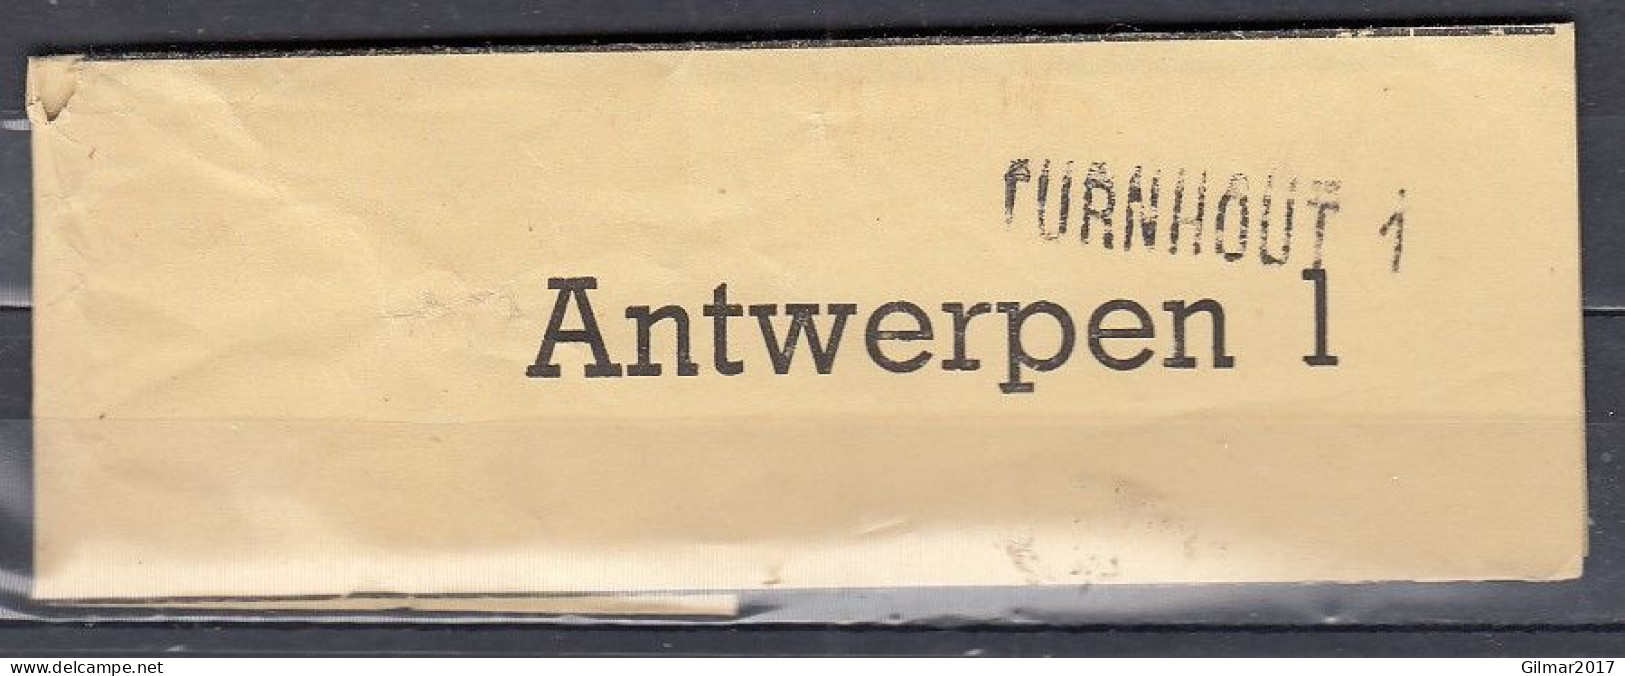 Fragment Van Antwerpen 1 Met Langstempel Turnhout 1 - Linear Postmarks